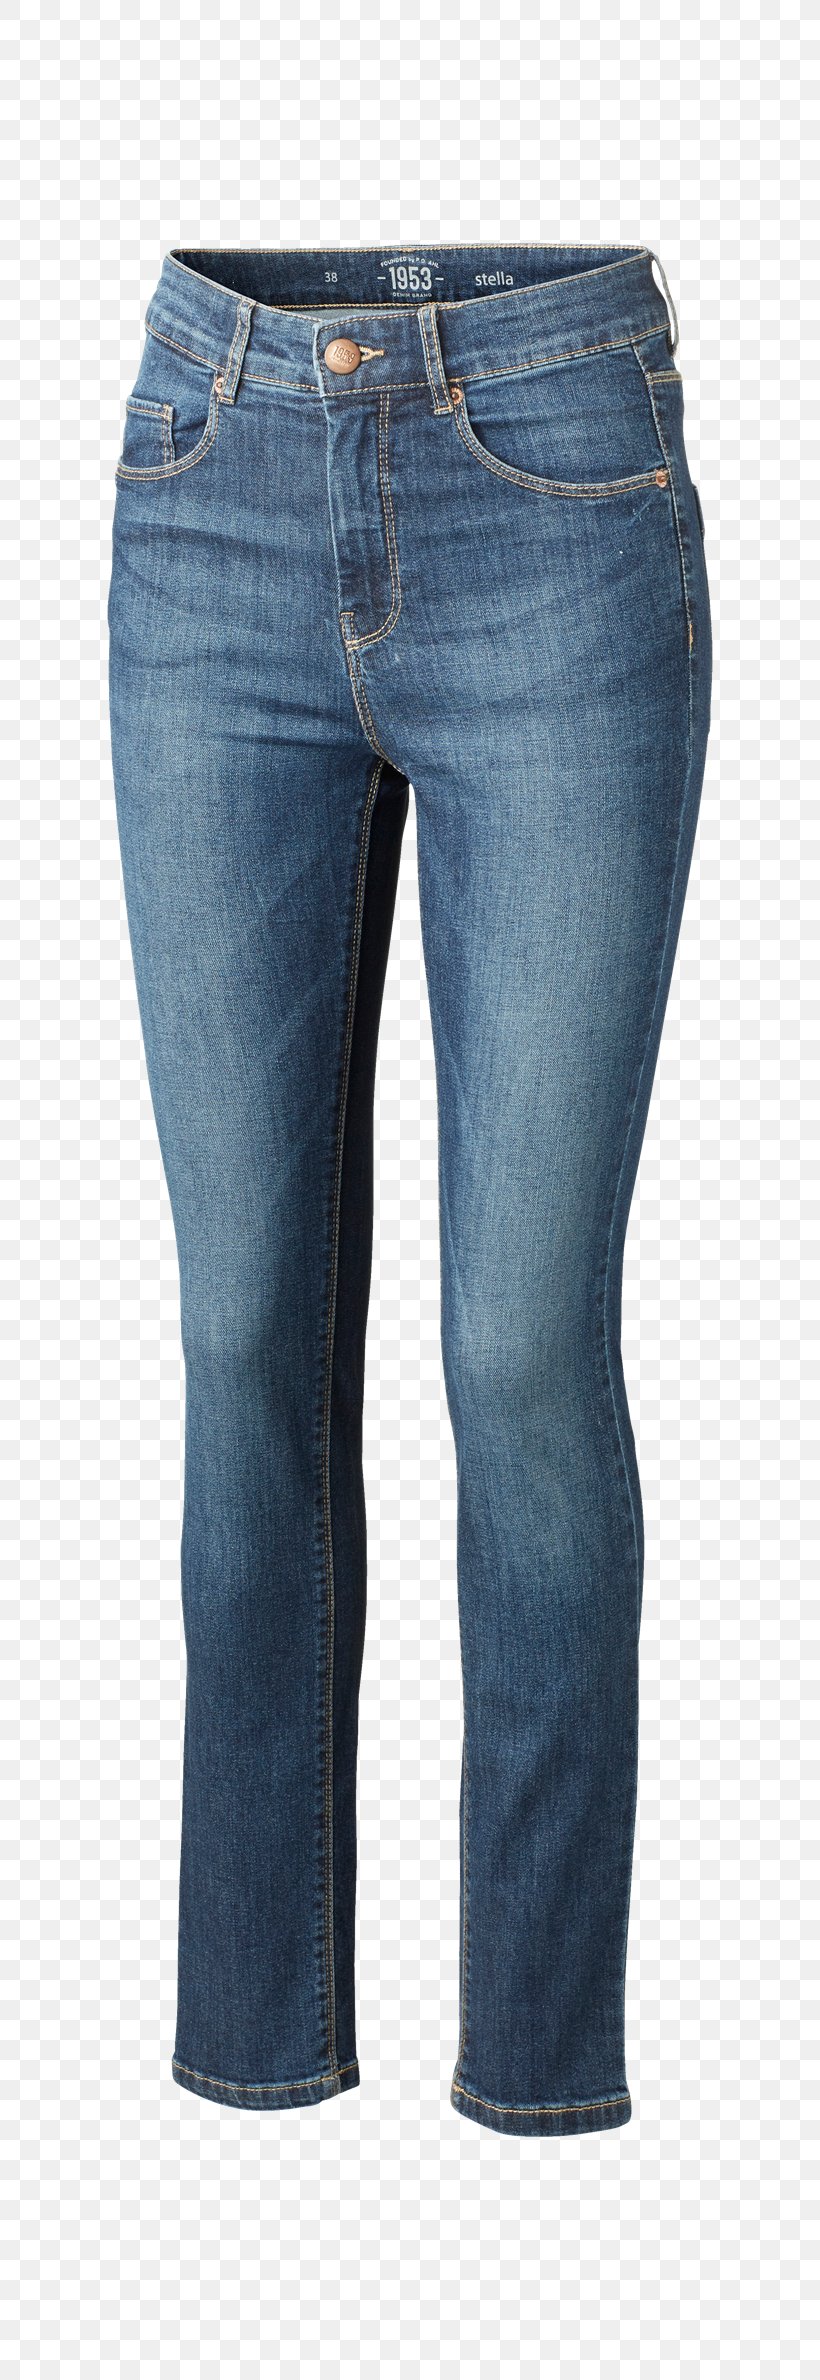 Jeans Denim Waist Microsoft Azure, PNG, 760x2380px, Jeans, Denim, Microsoft Azure, Pocket, Trousers Download Free